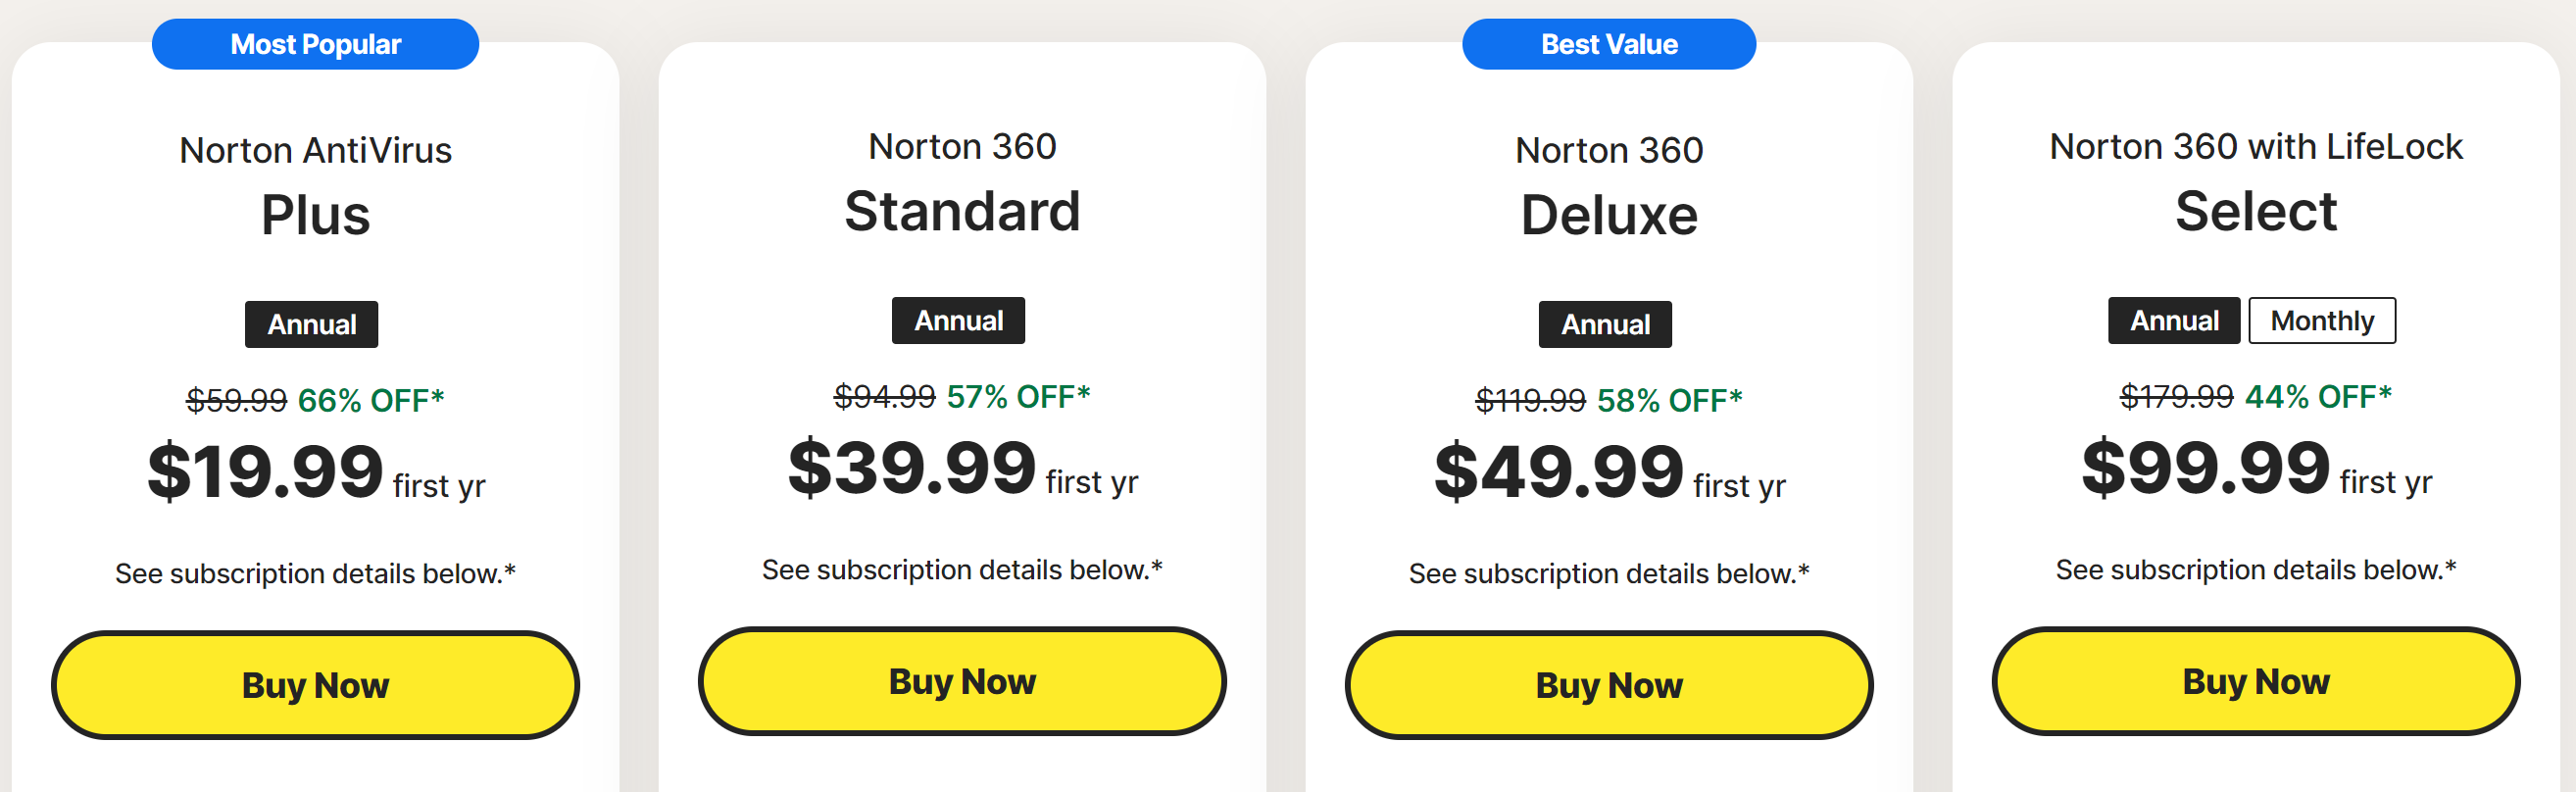 Norton Pricing